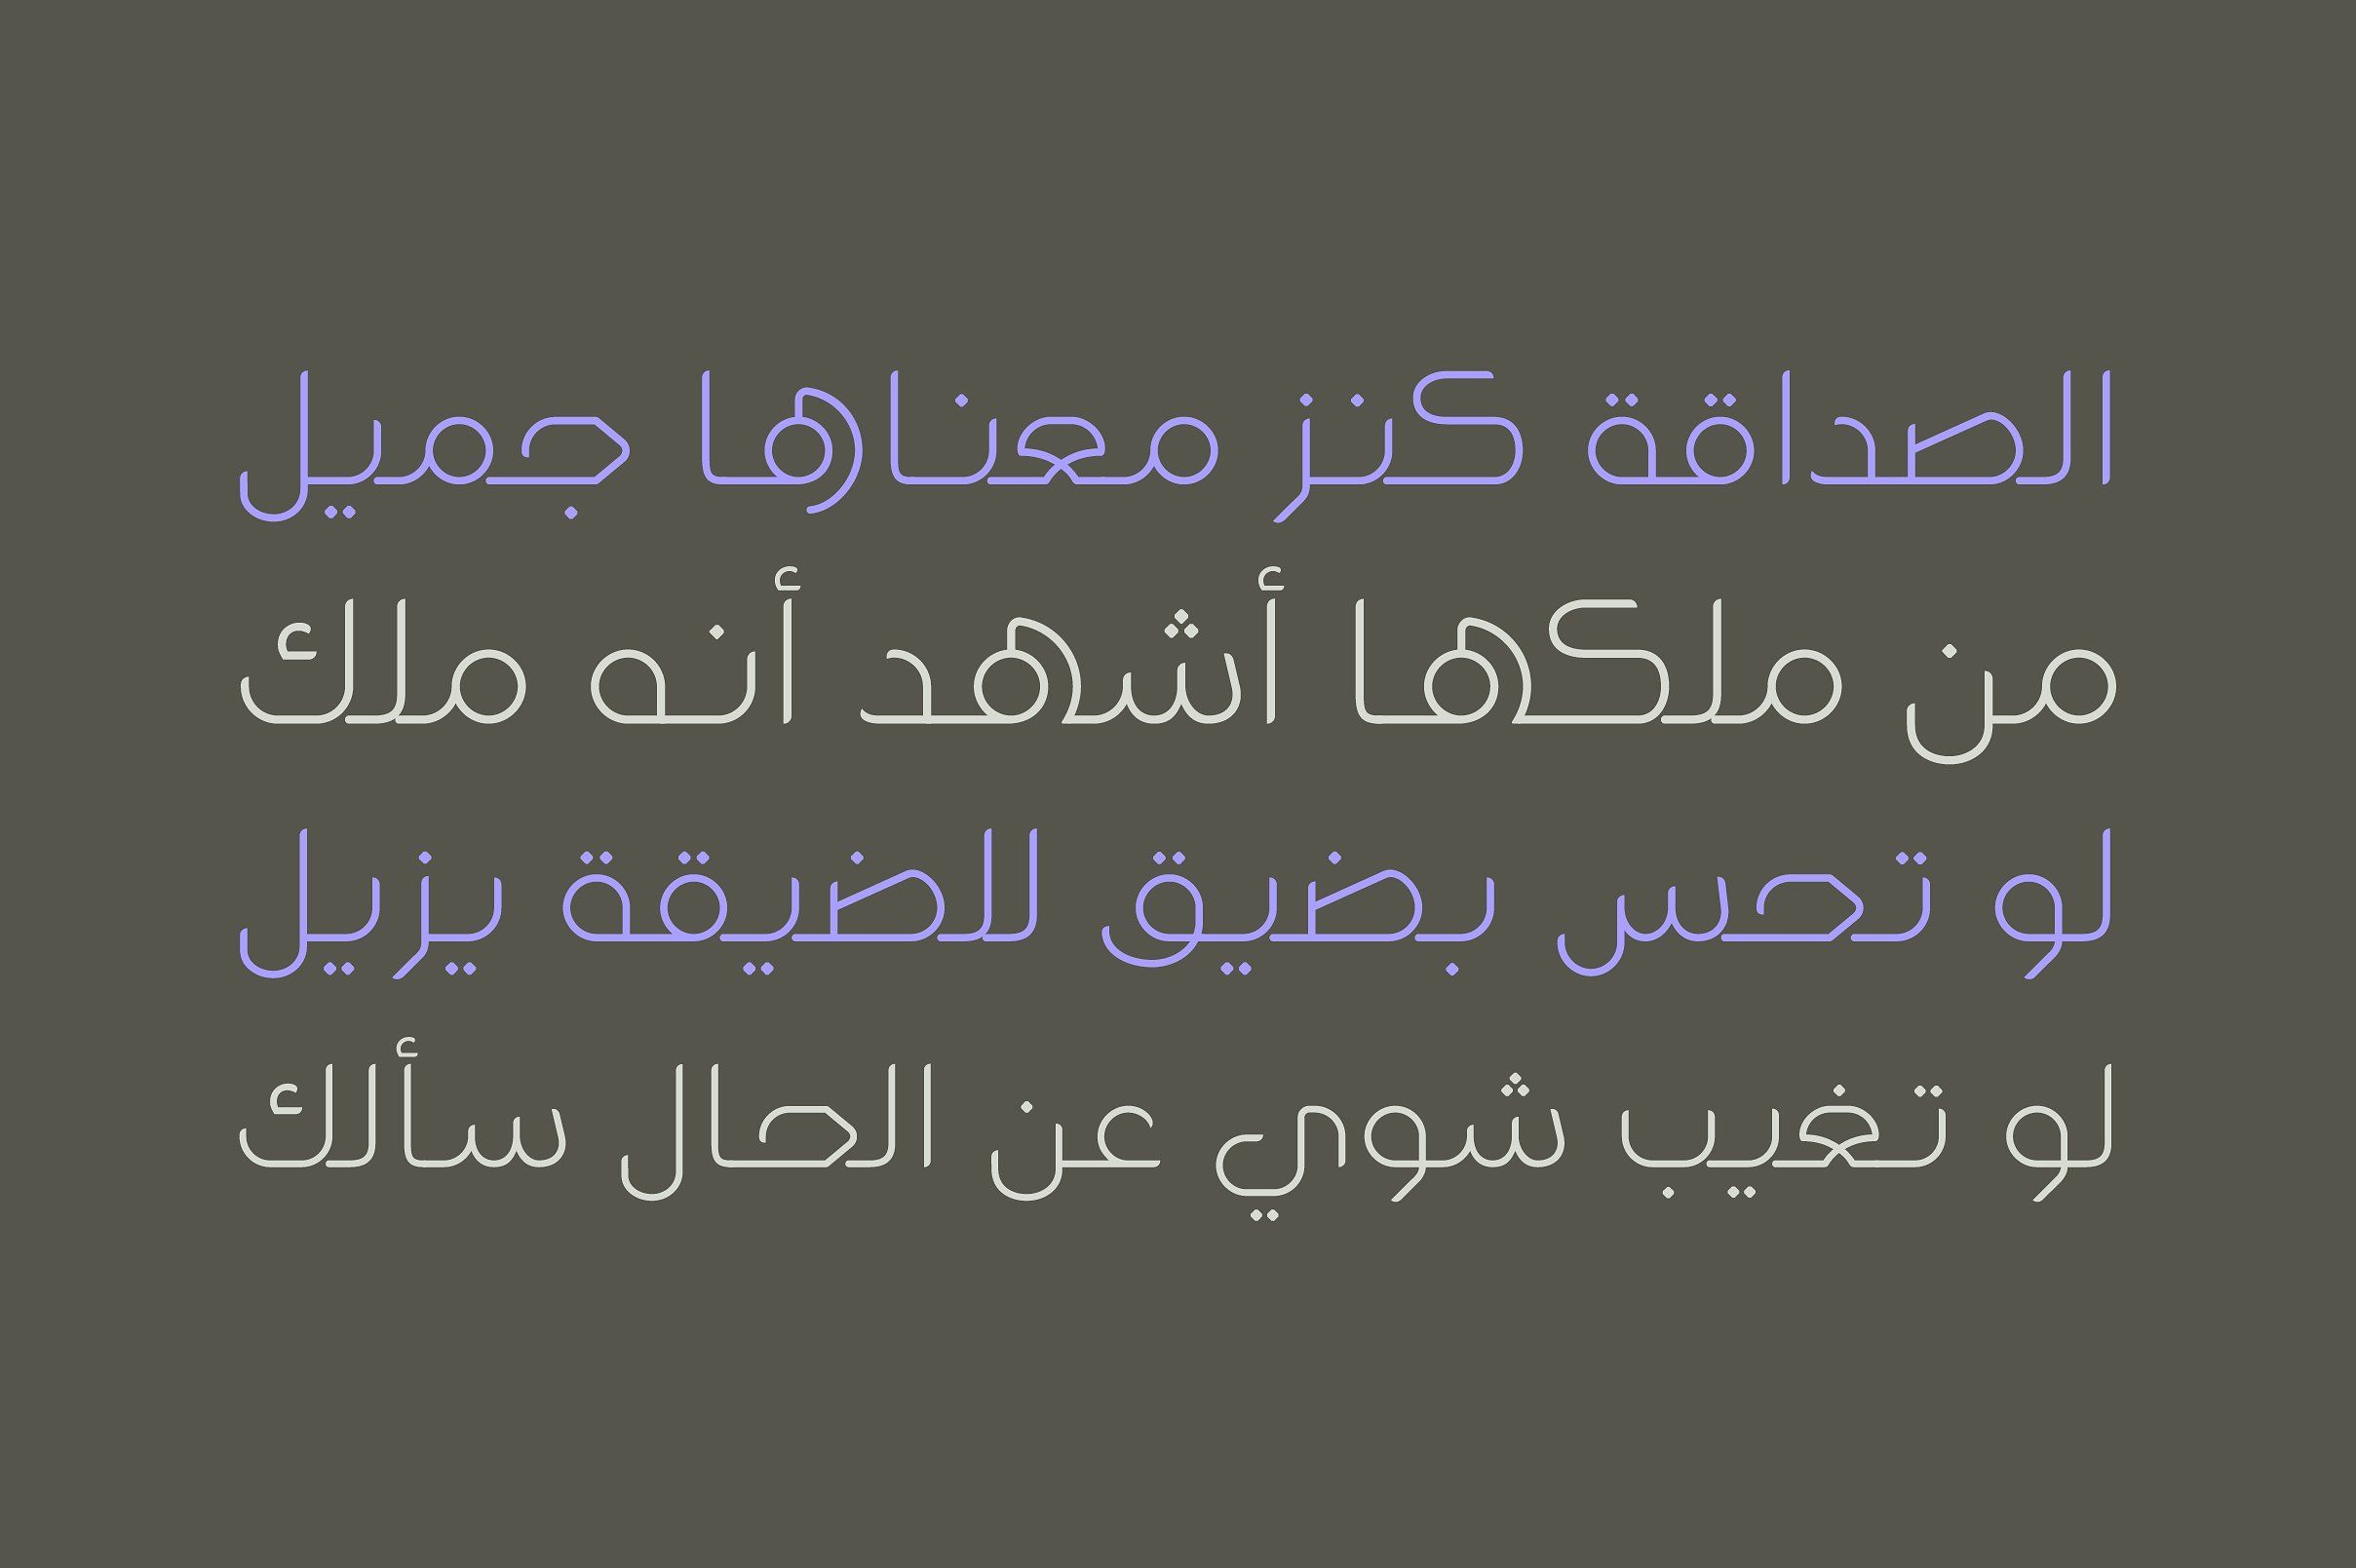 arabic fonts office 2003